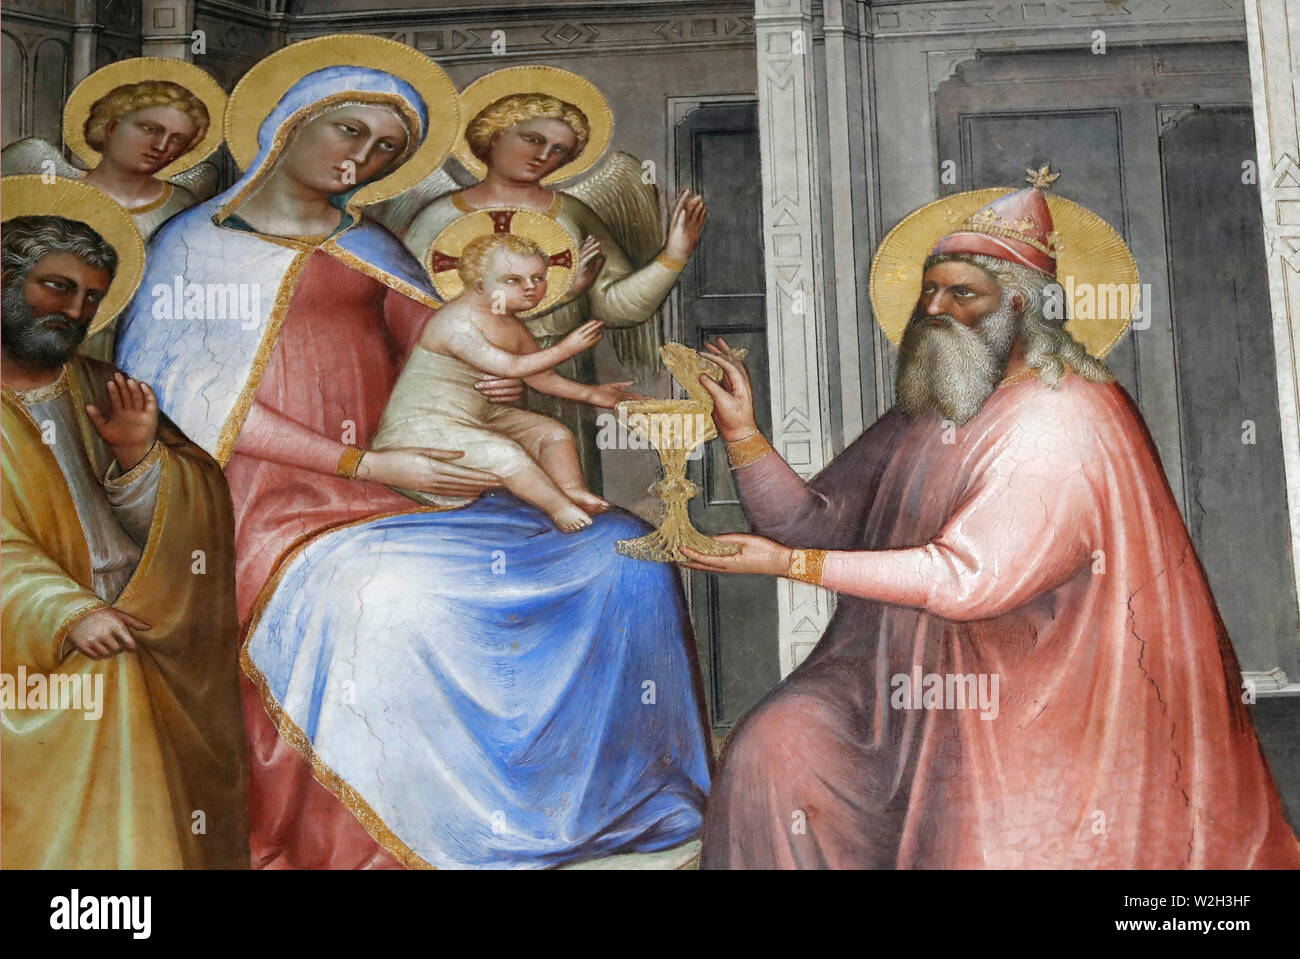 The Padua Baptistery. Ceilling frescoes  14th century by Giusto de Menabuoi. The circumcision of Jesus. Padua. Italy. Stock Photo